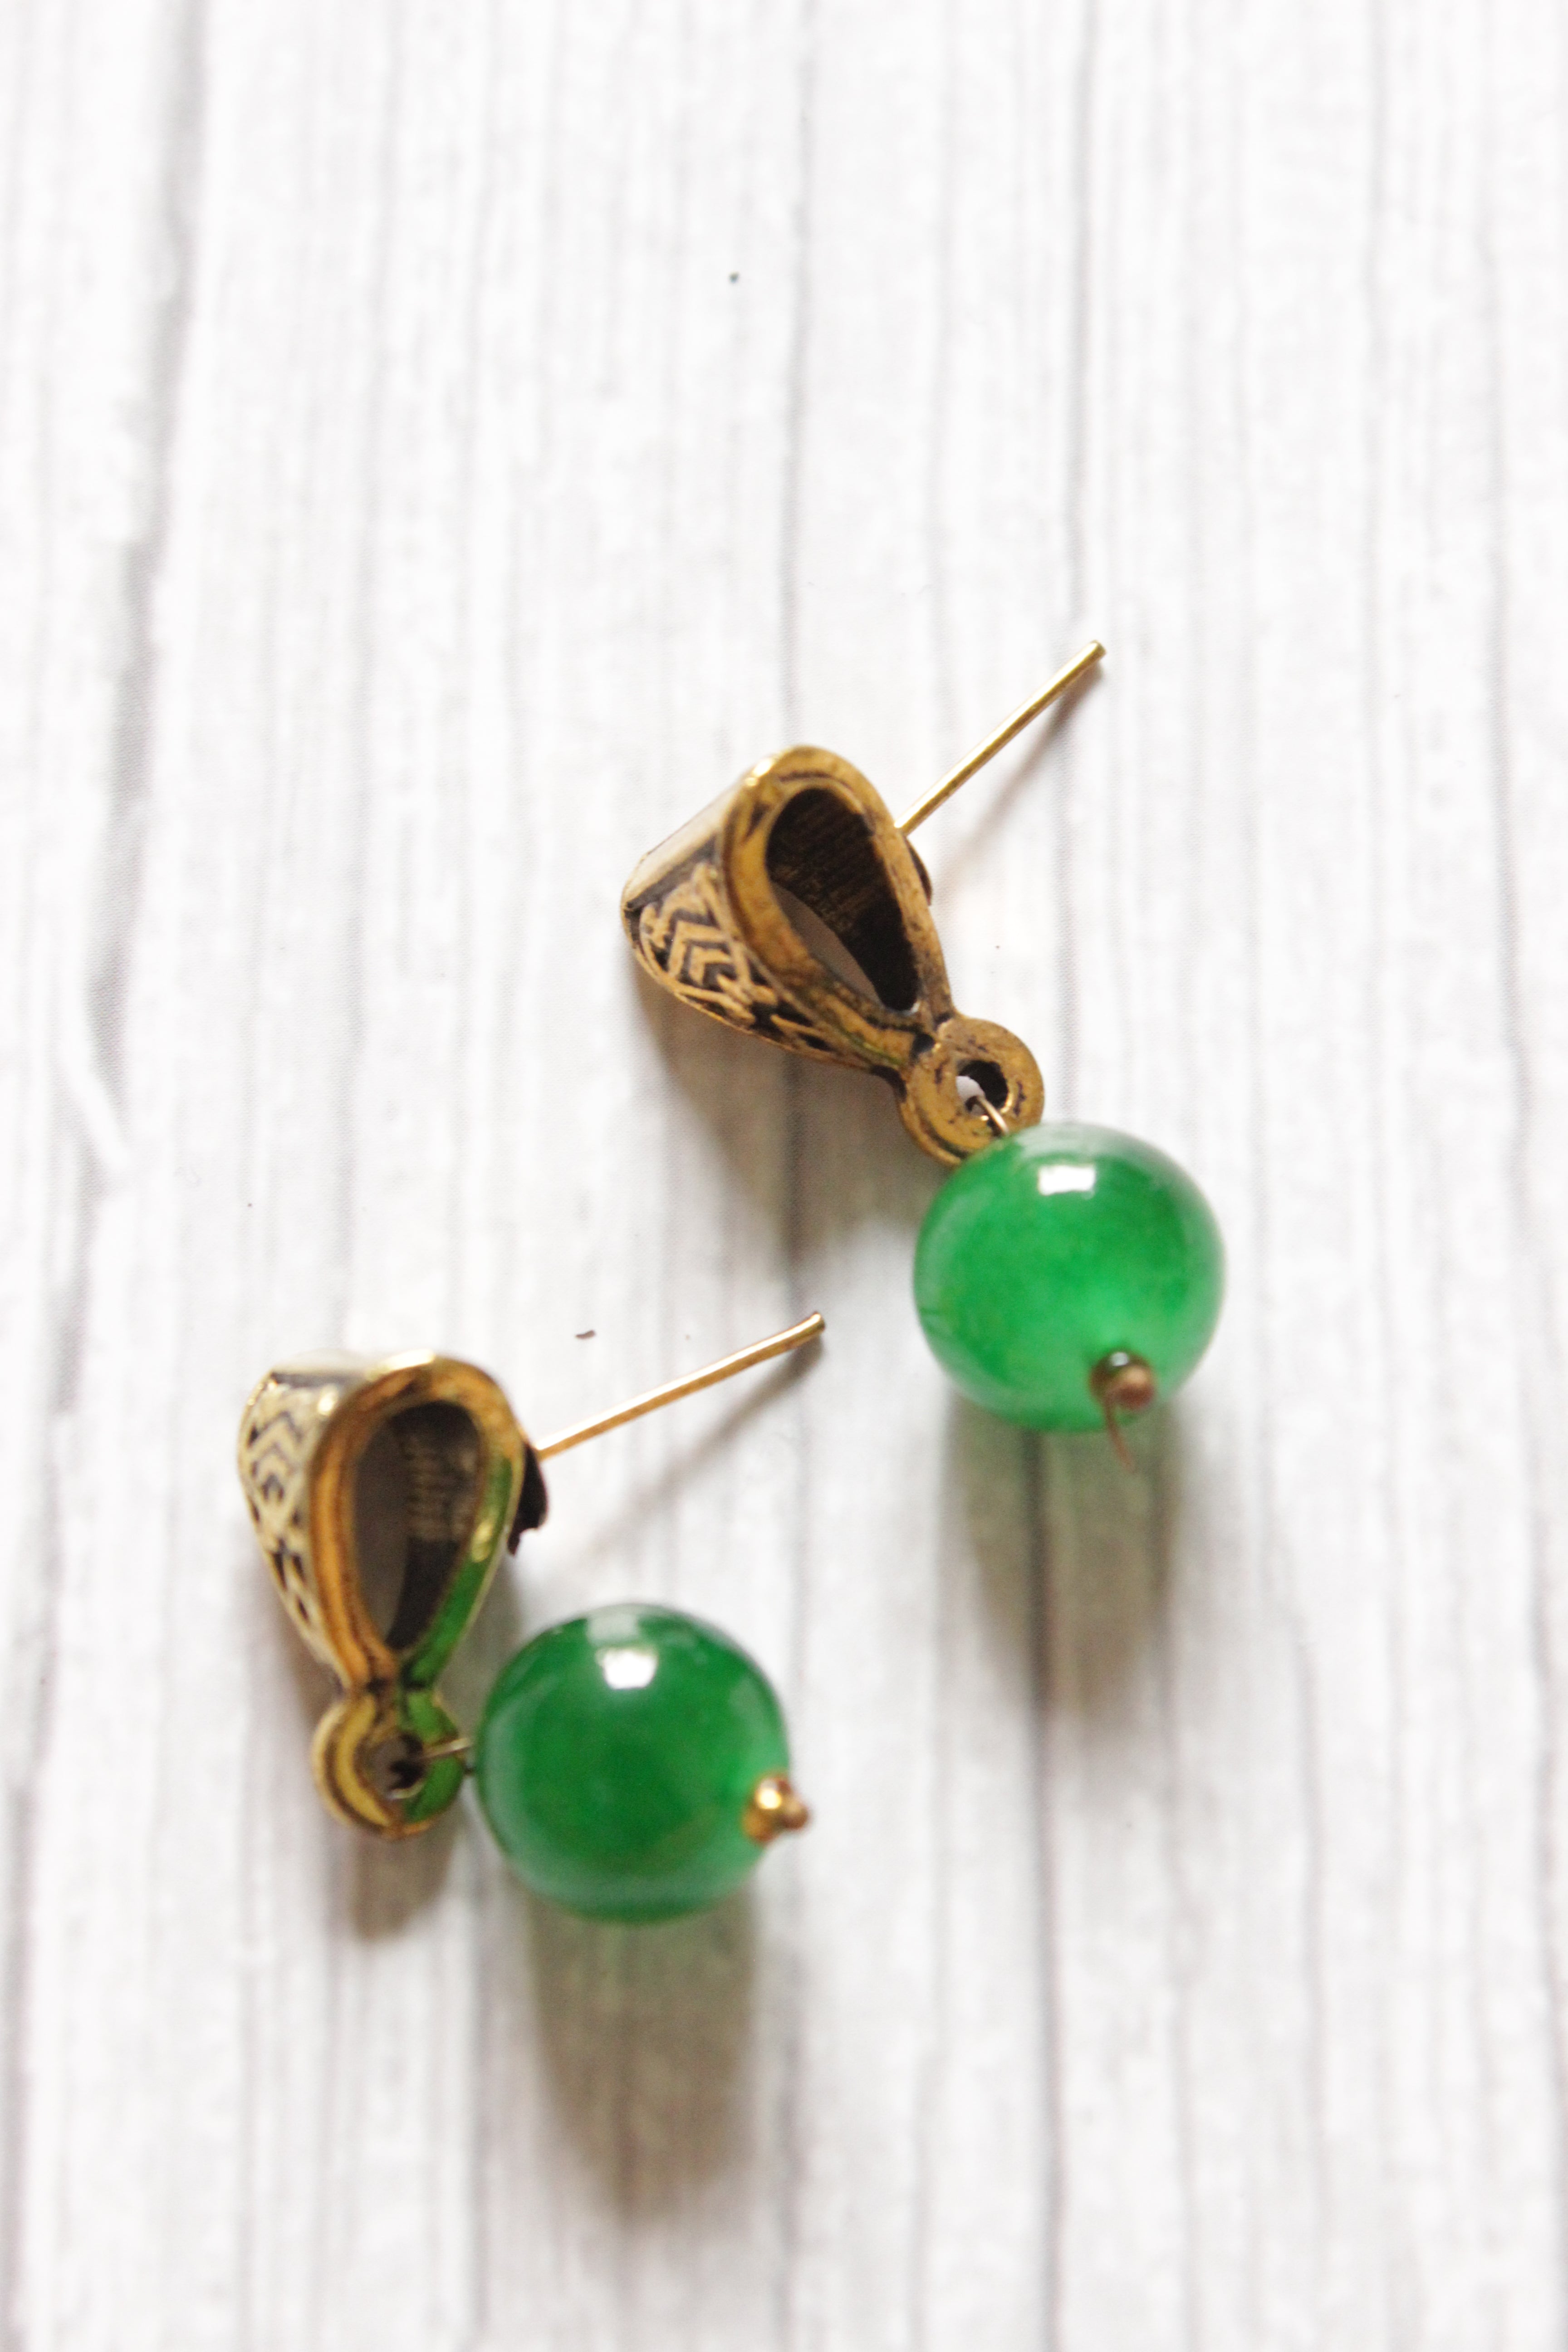 Gold-Toned Green Glass Beads Choker Necklace Set